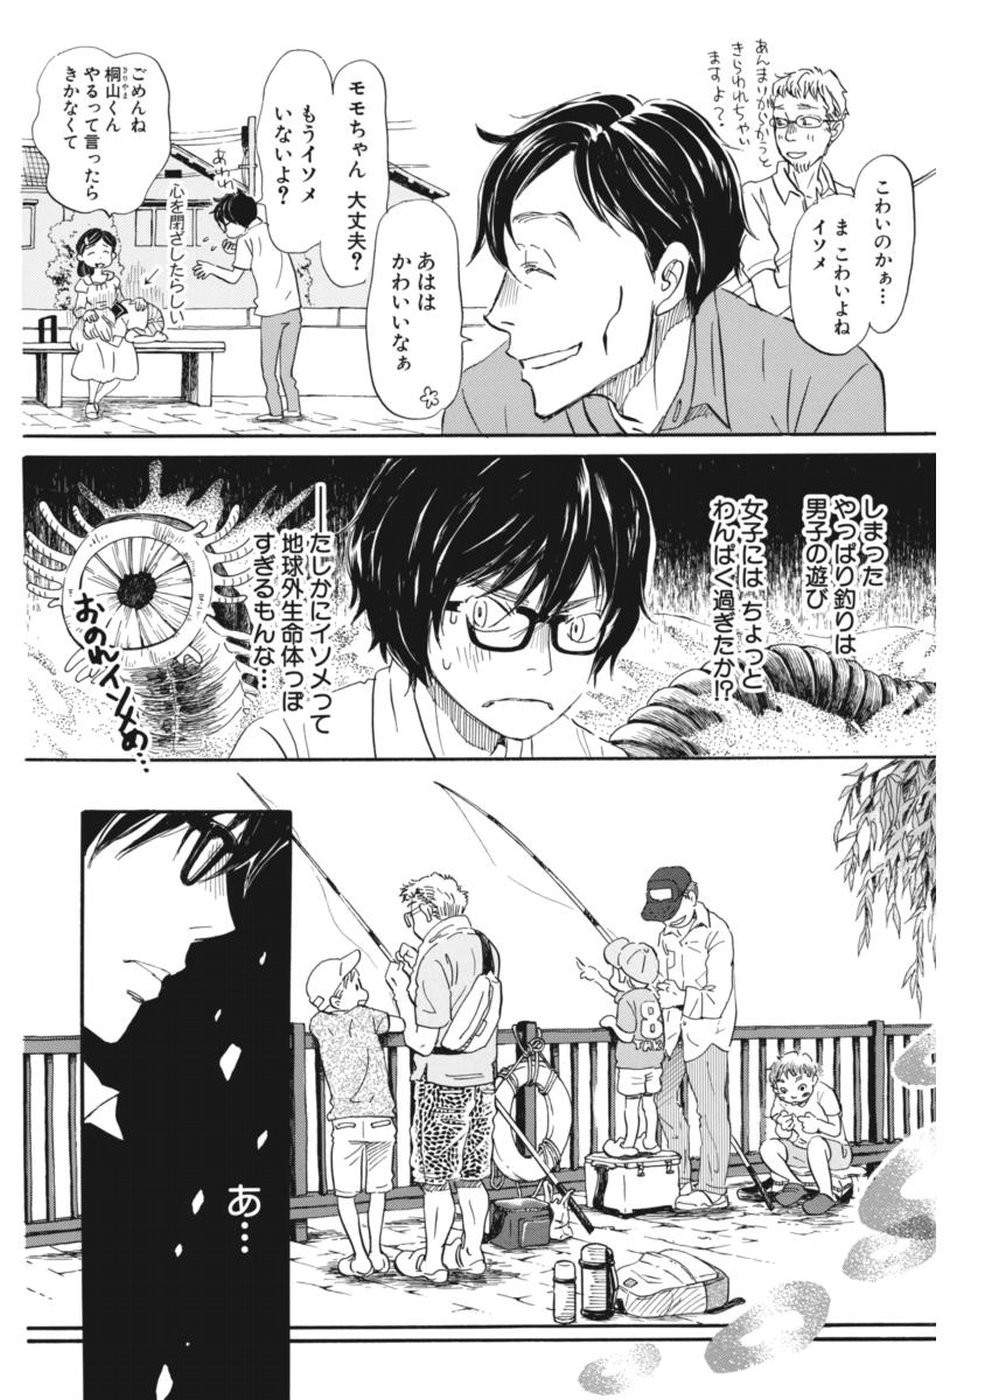 3 Gatsu no Lion - Chapter 144 - Page 4